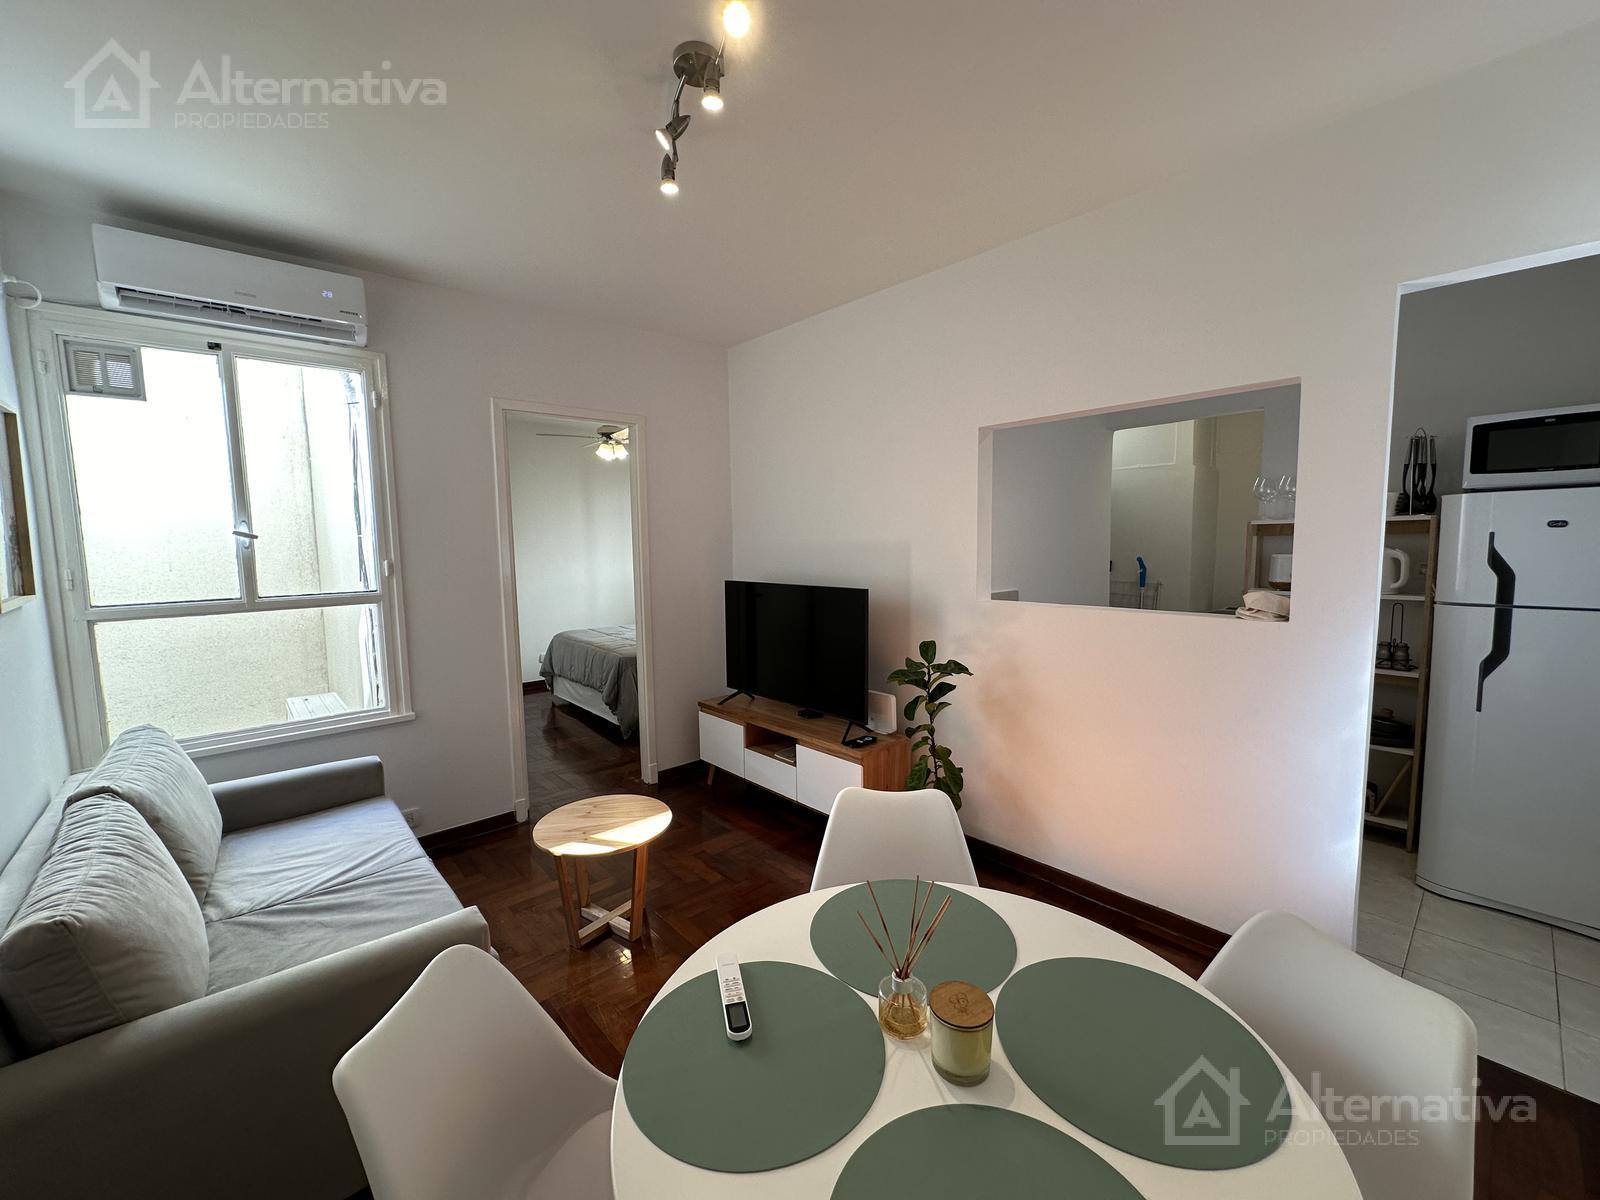 #5151467 | Temporary Rental | Apartment | Palermo Soho (Alternativa Propiedades)